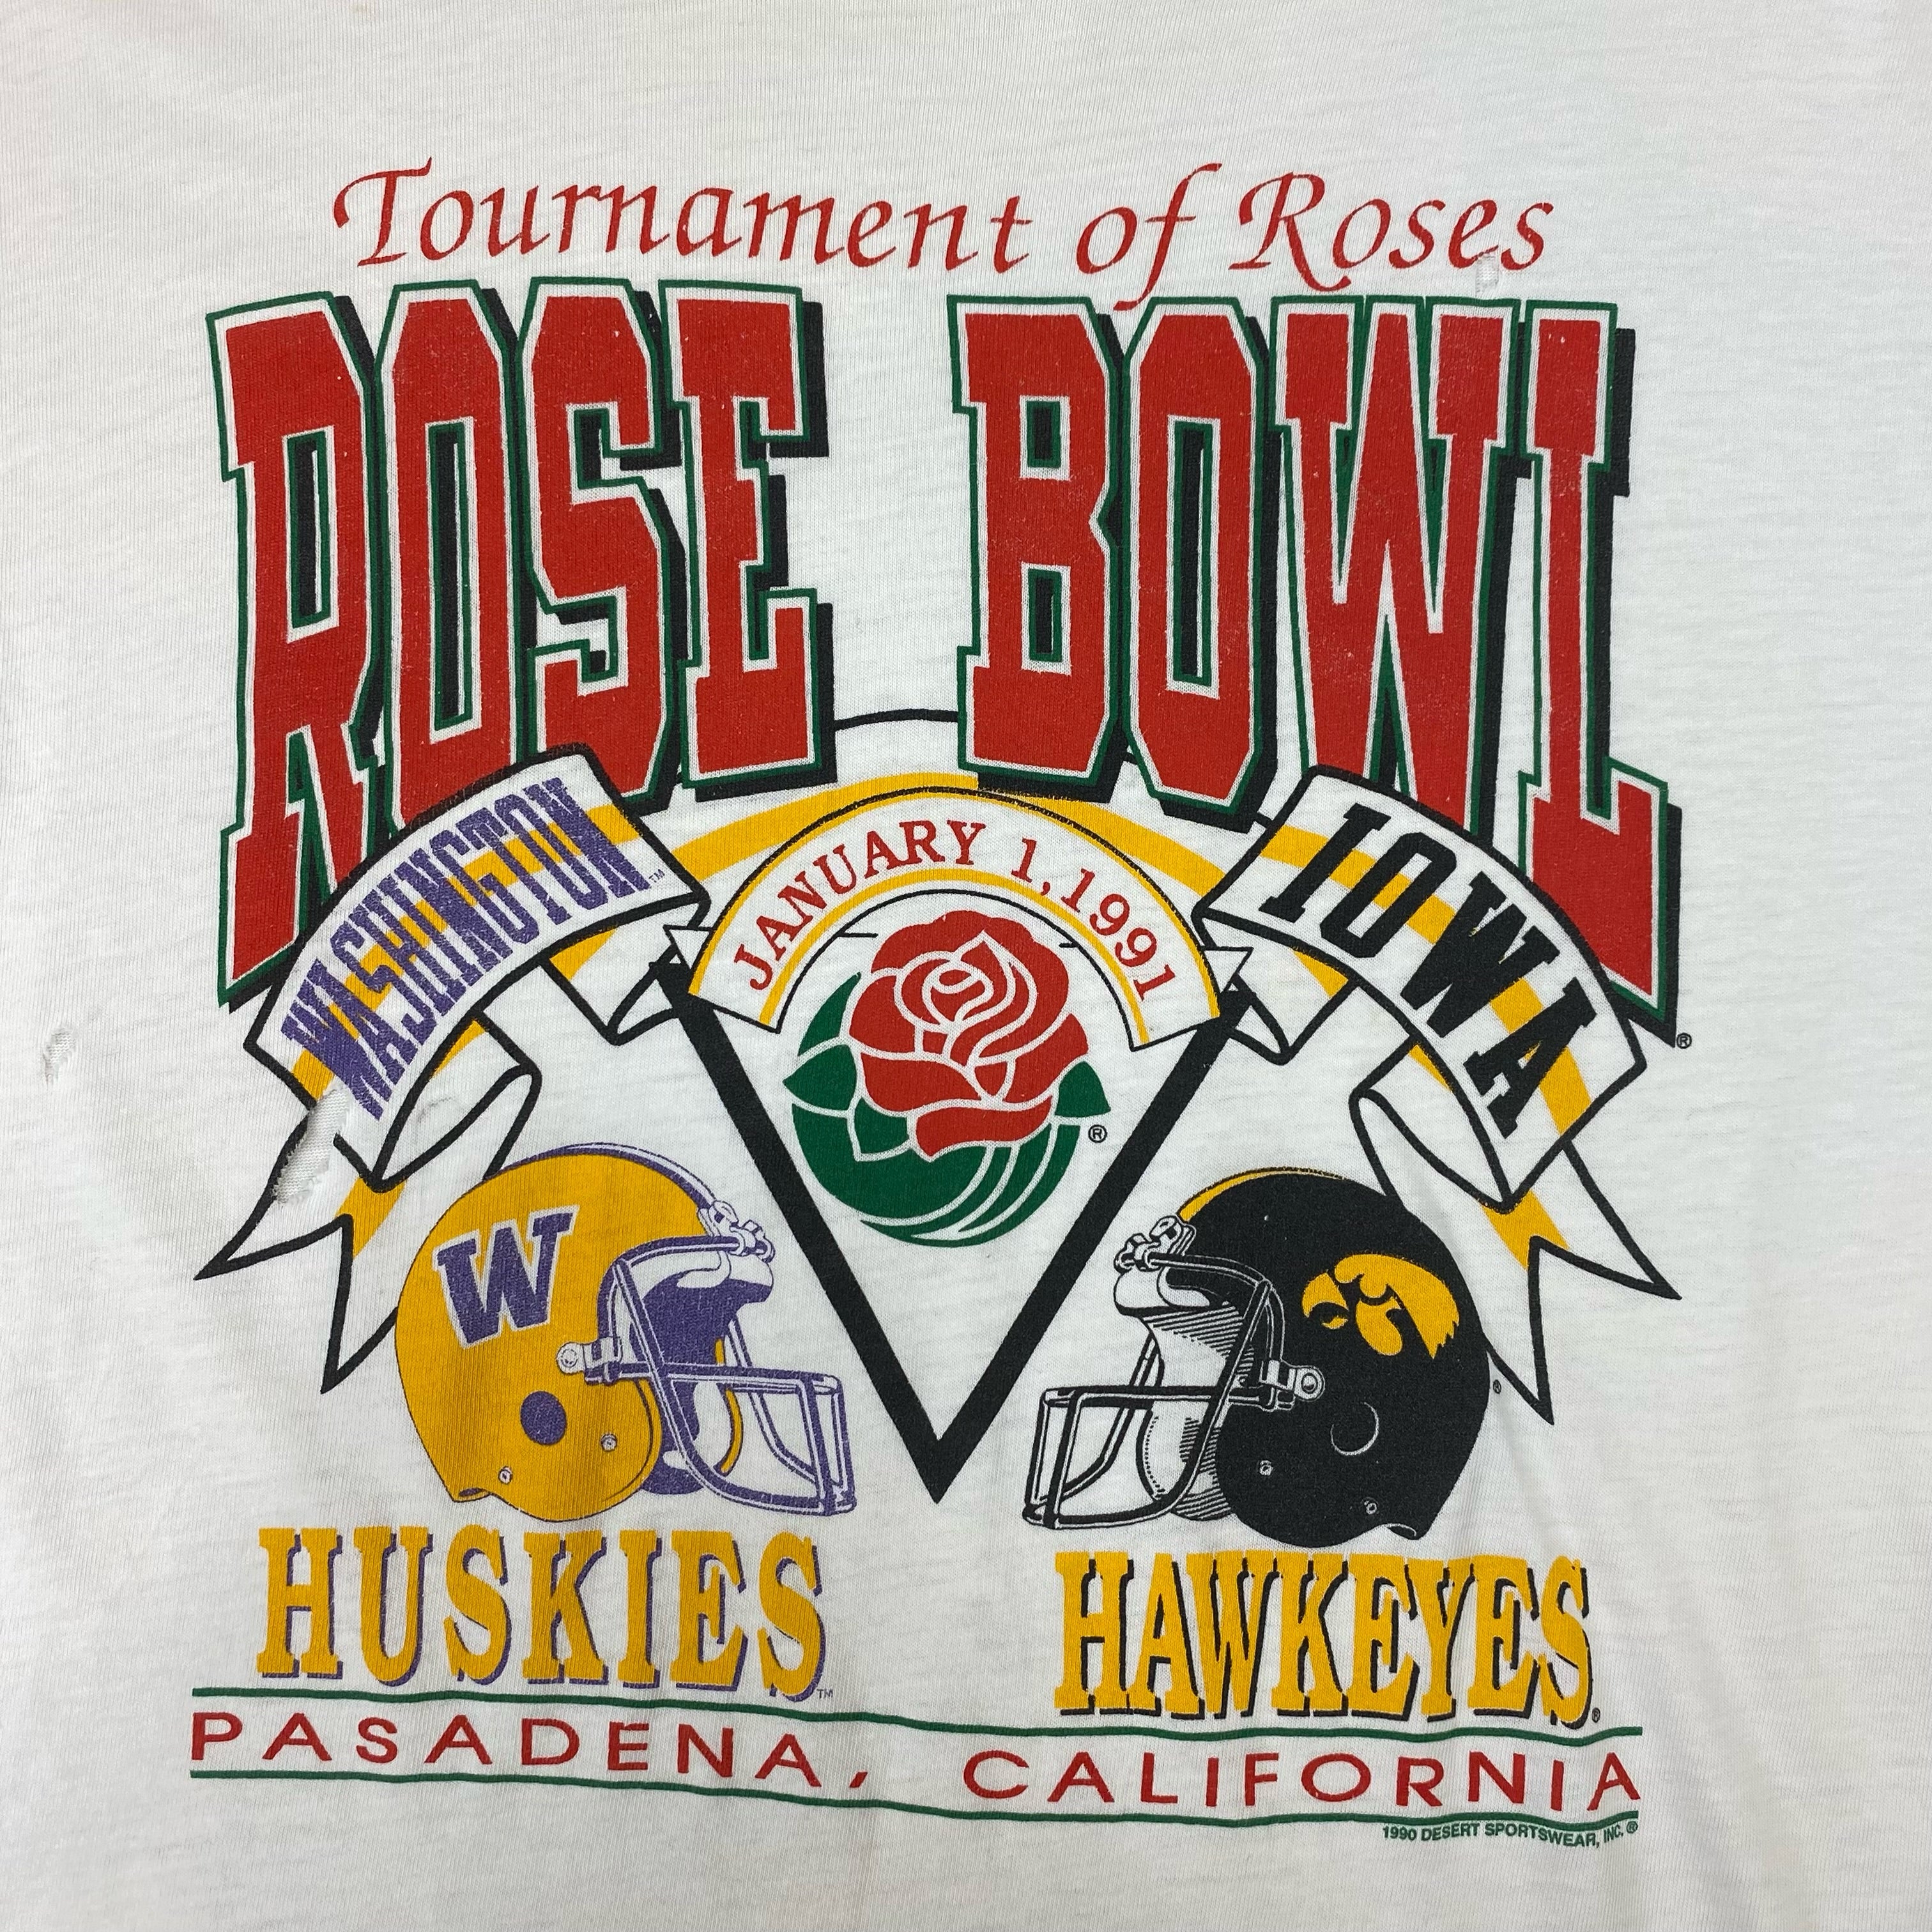 1990 Rose Bowl Huskies VS Hawkeyes T-Shirt - White